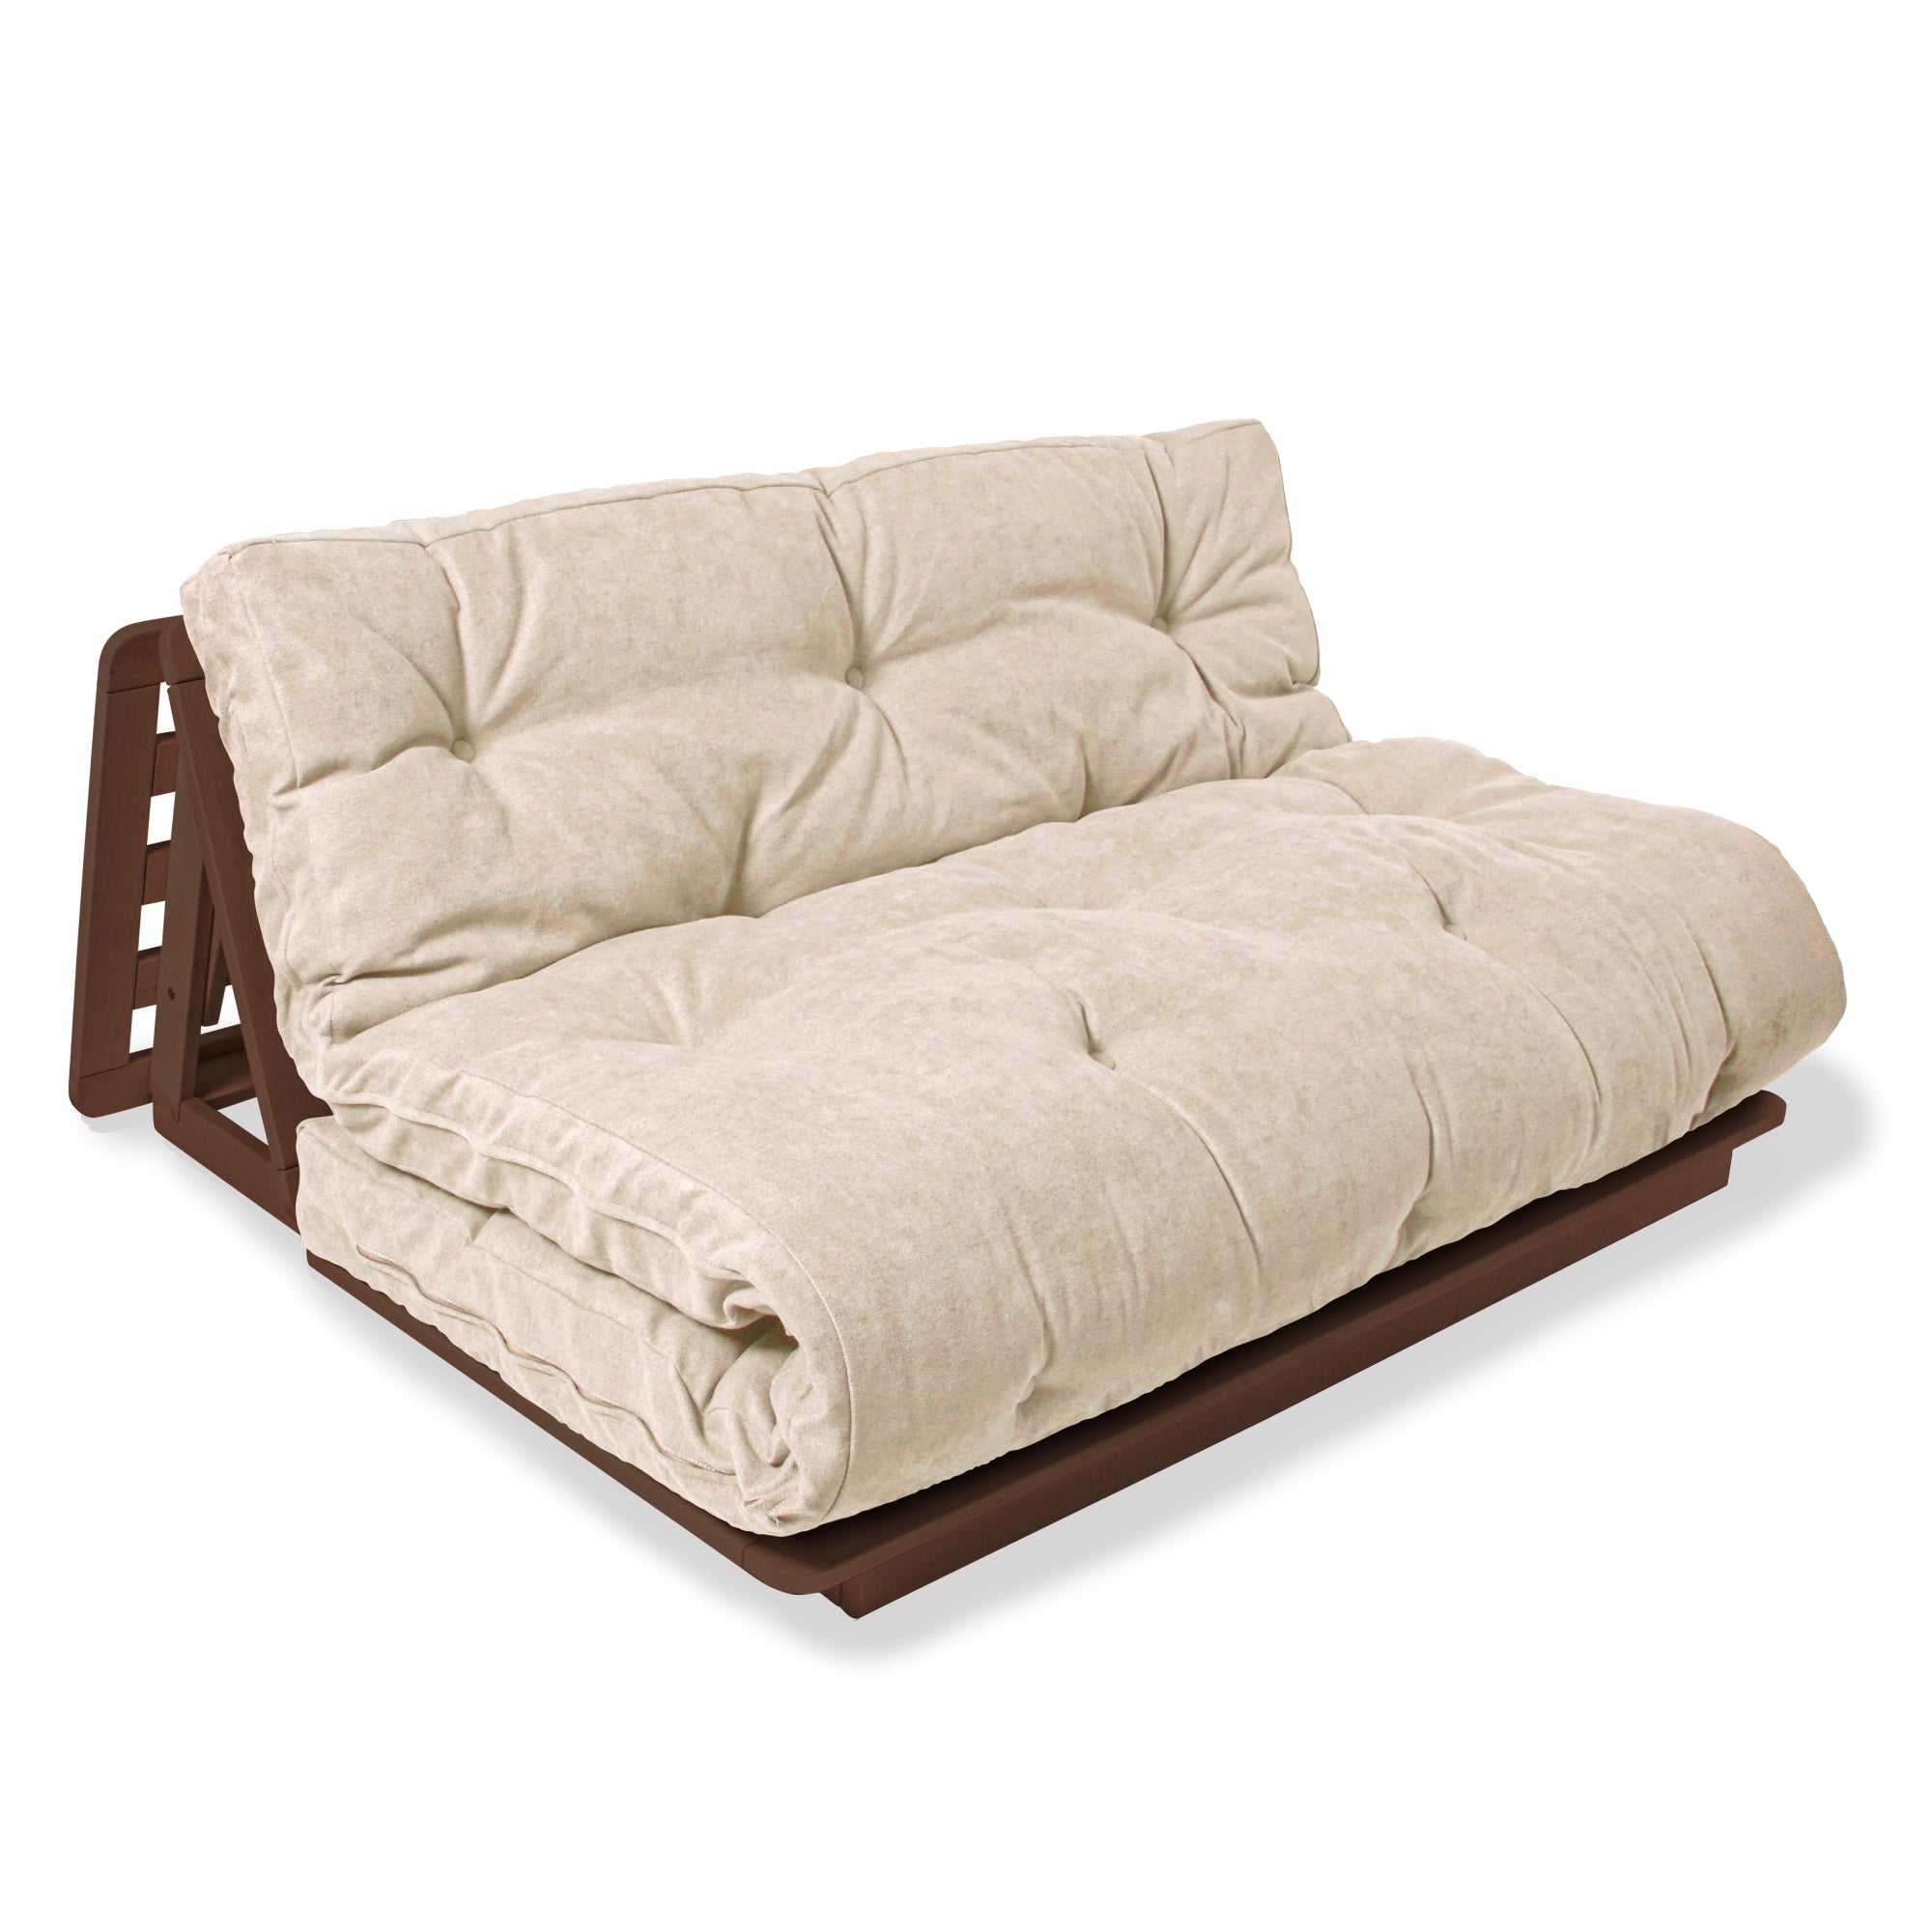 LAYTI-140 Futon Chair-walnut frame-creamy fabric